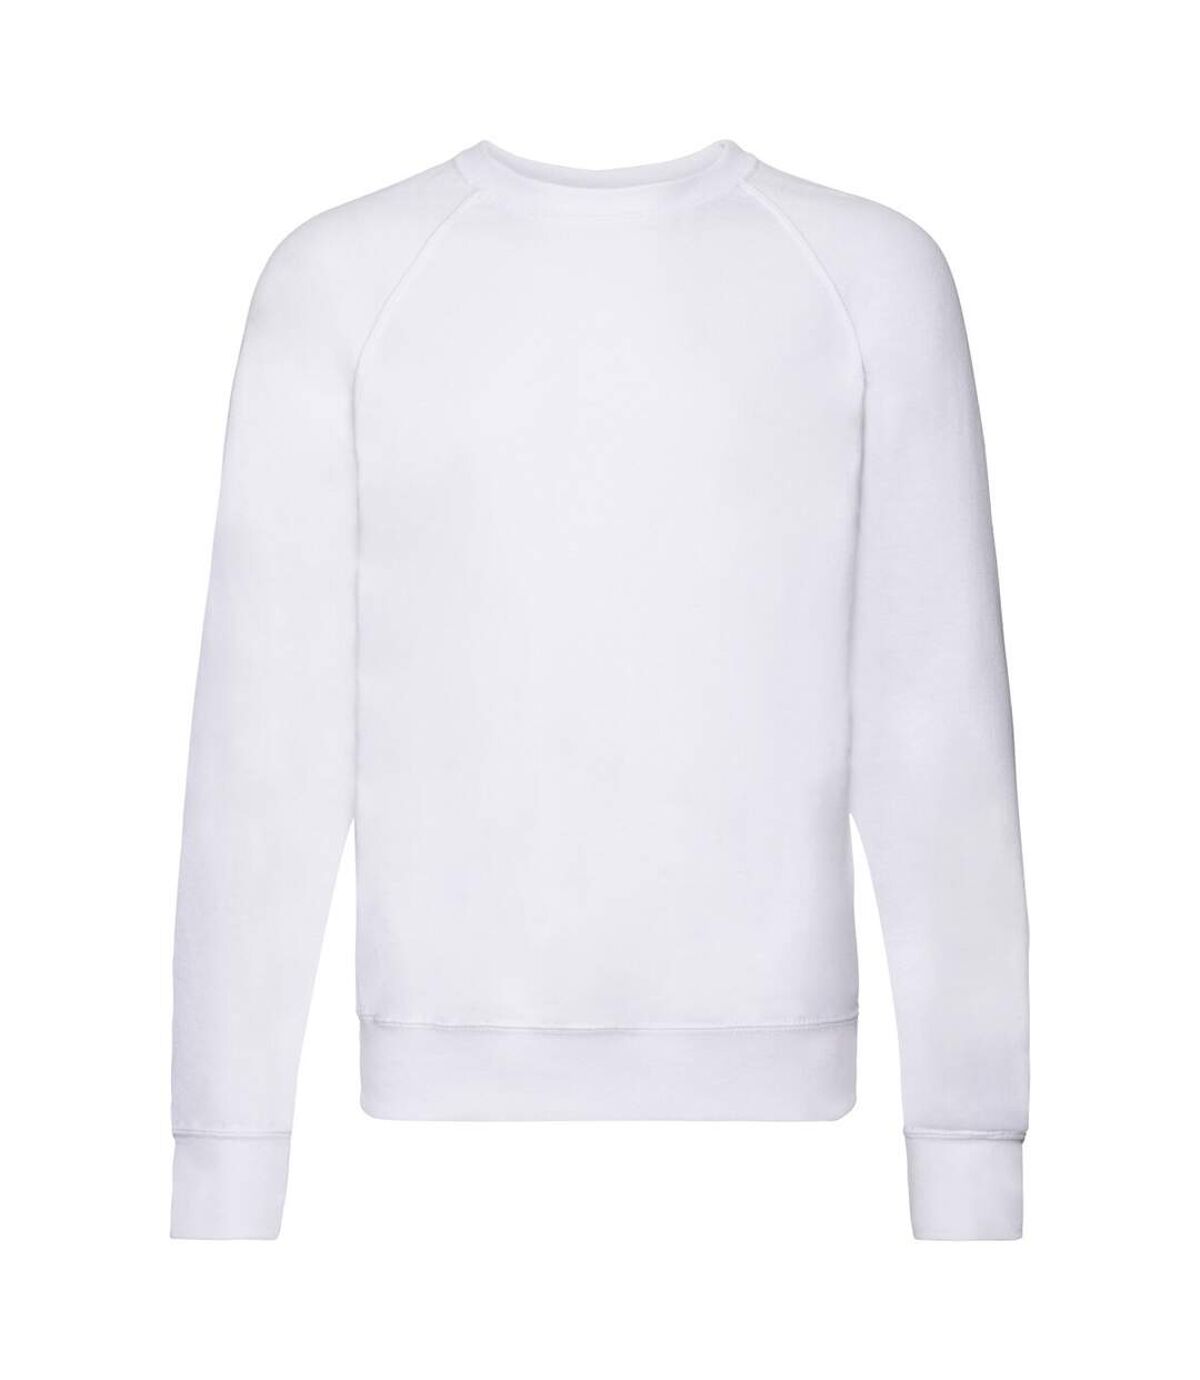 Fruit Of The Loom Mens Lightweight Raglan Sweatshirt (240 GSM) (White) - UTBC2653